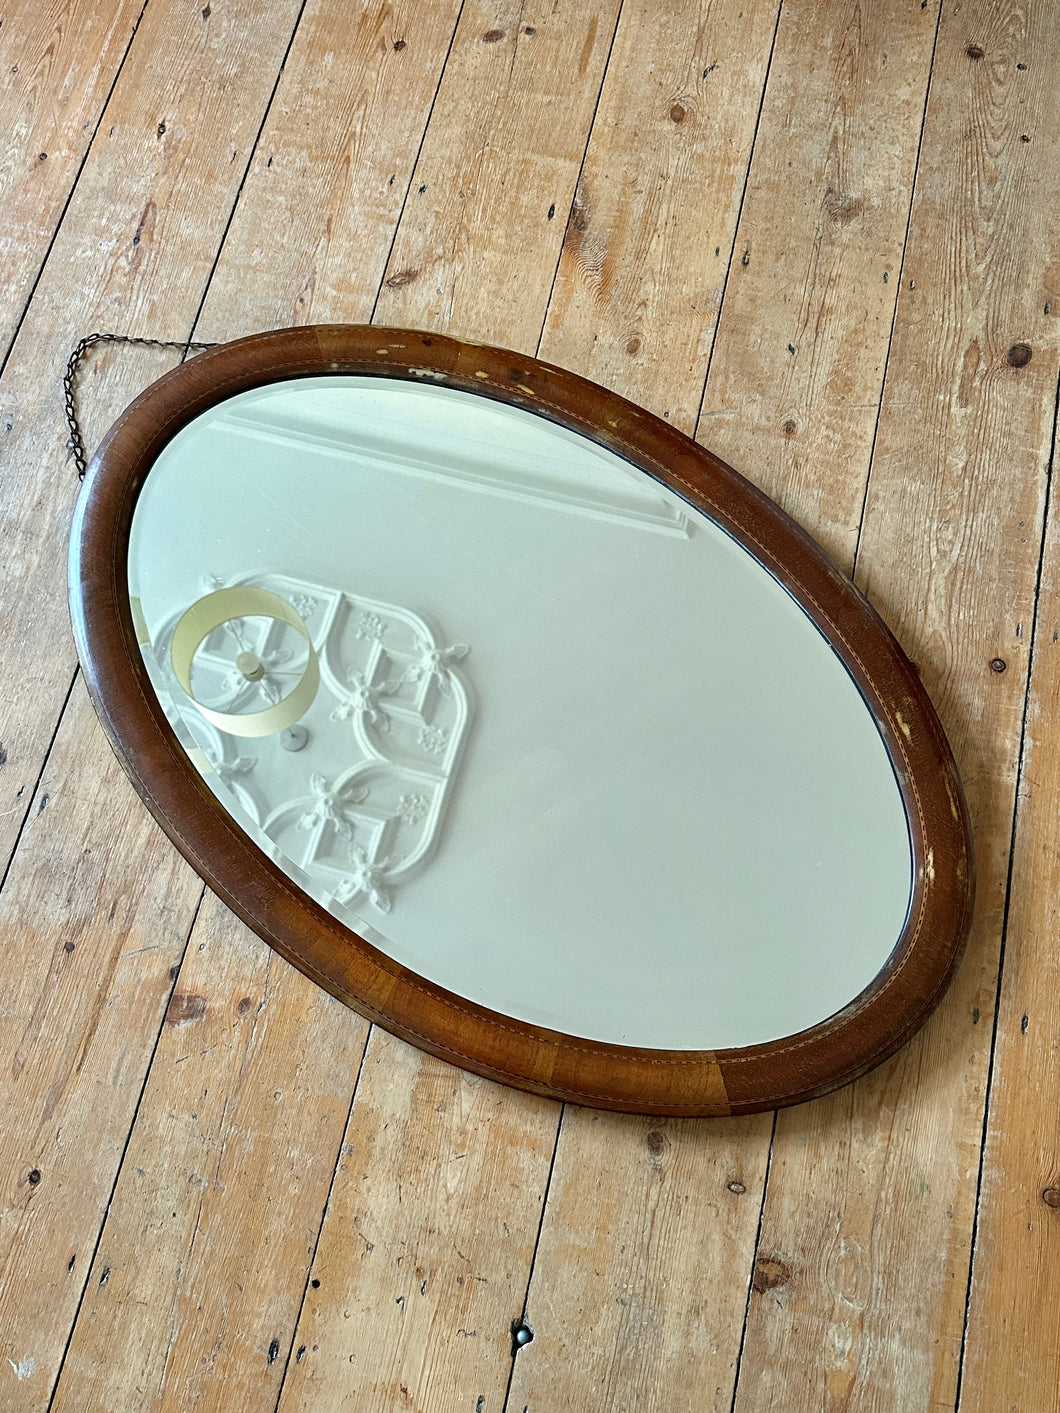 Antique Rustic Wooden Mirror